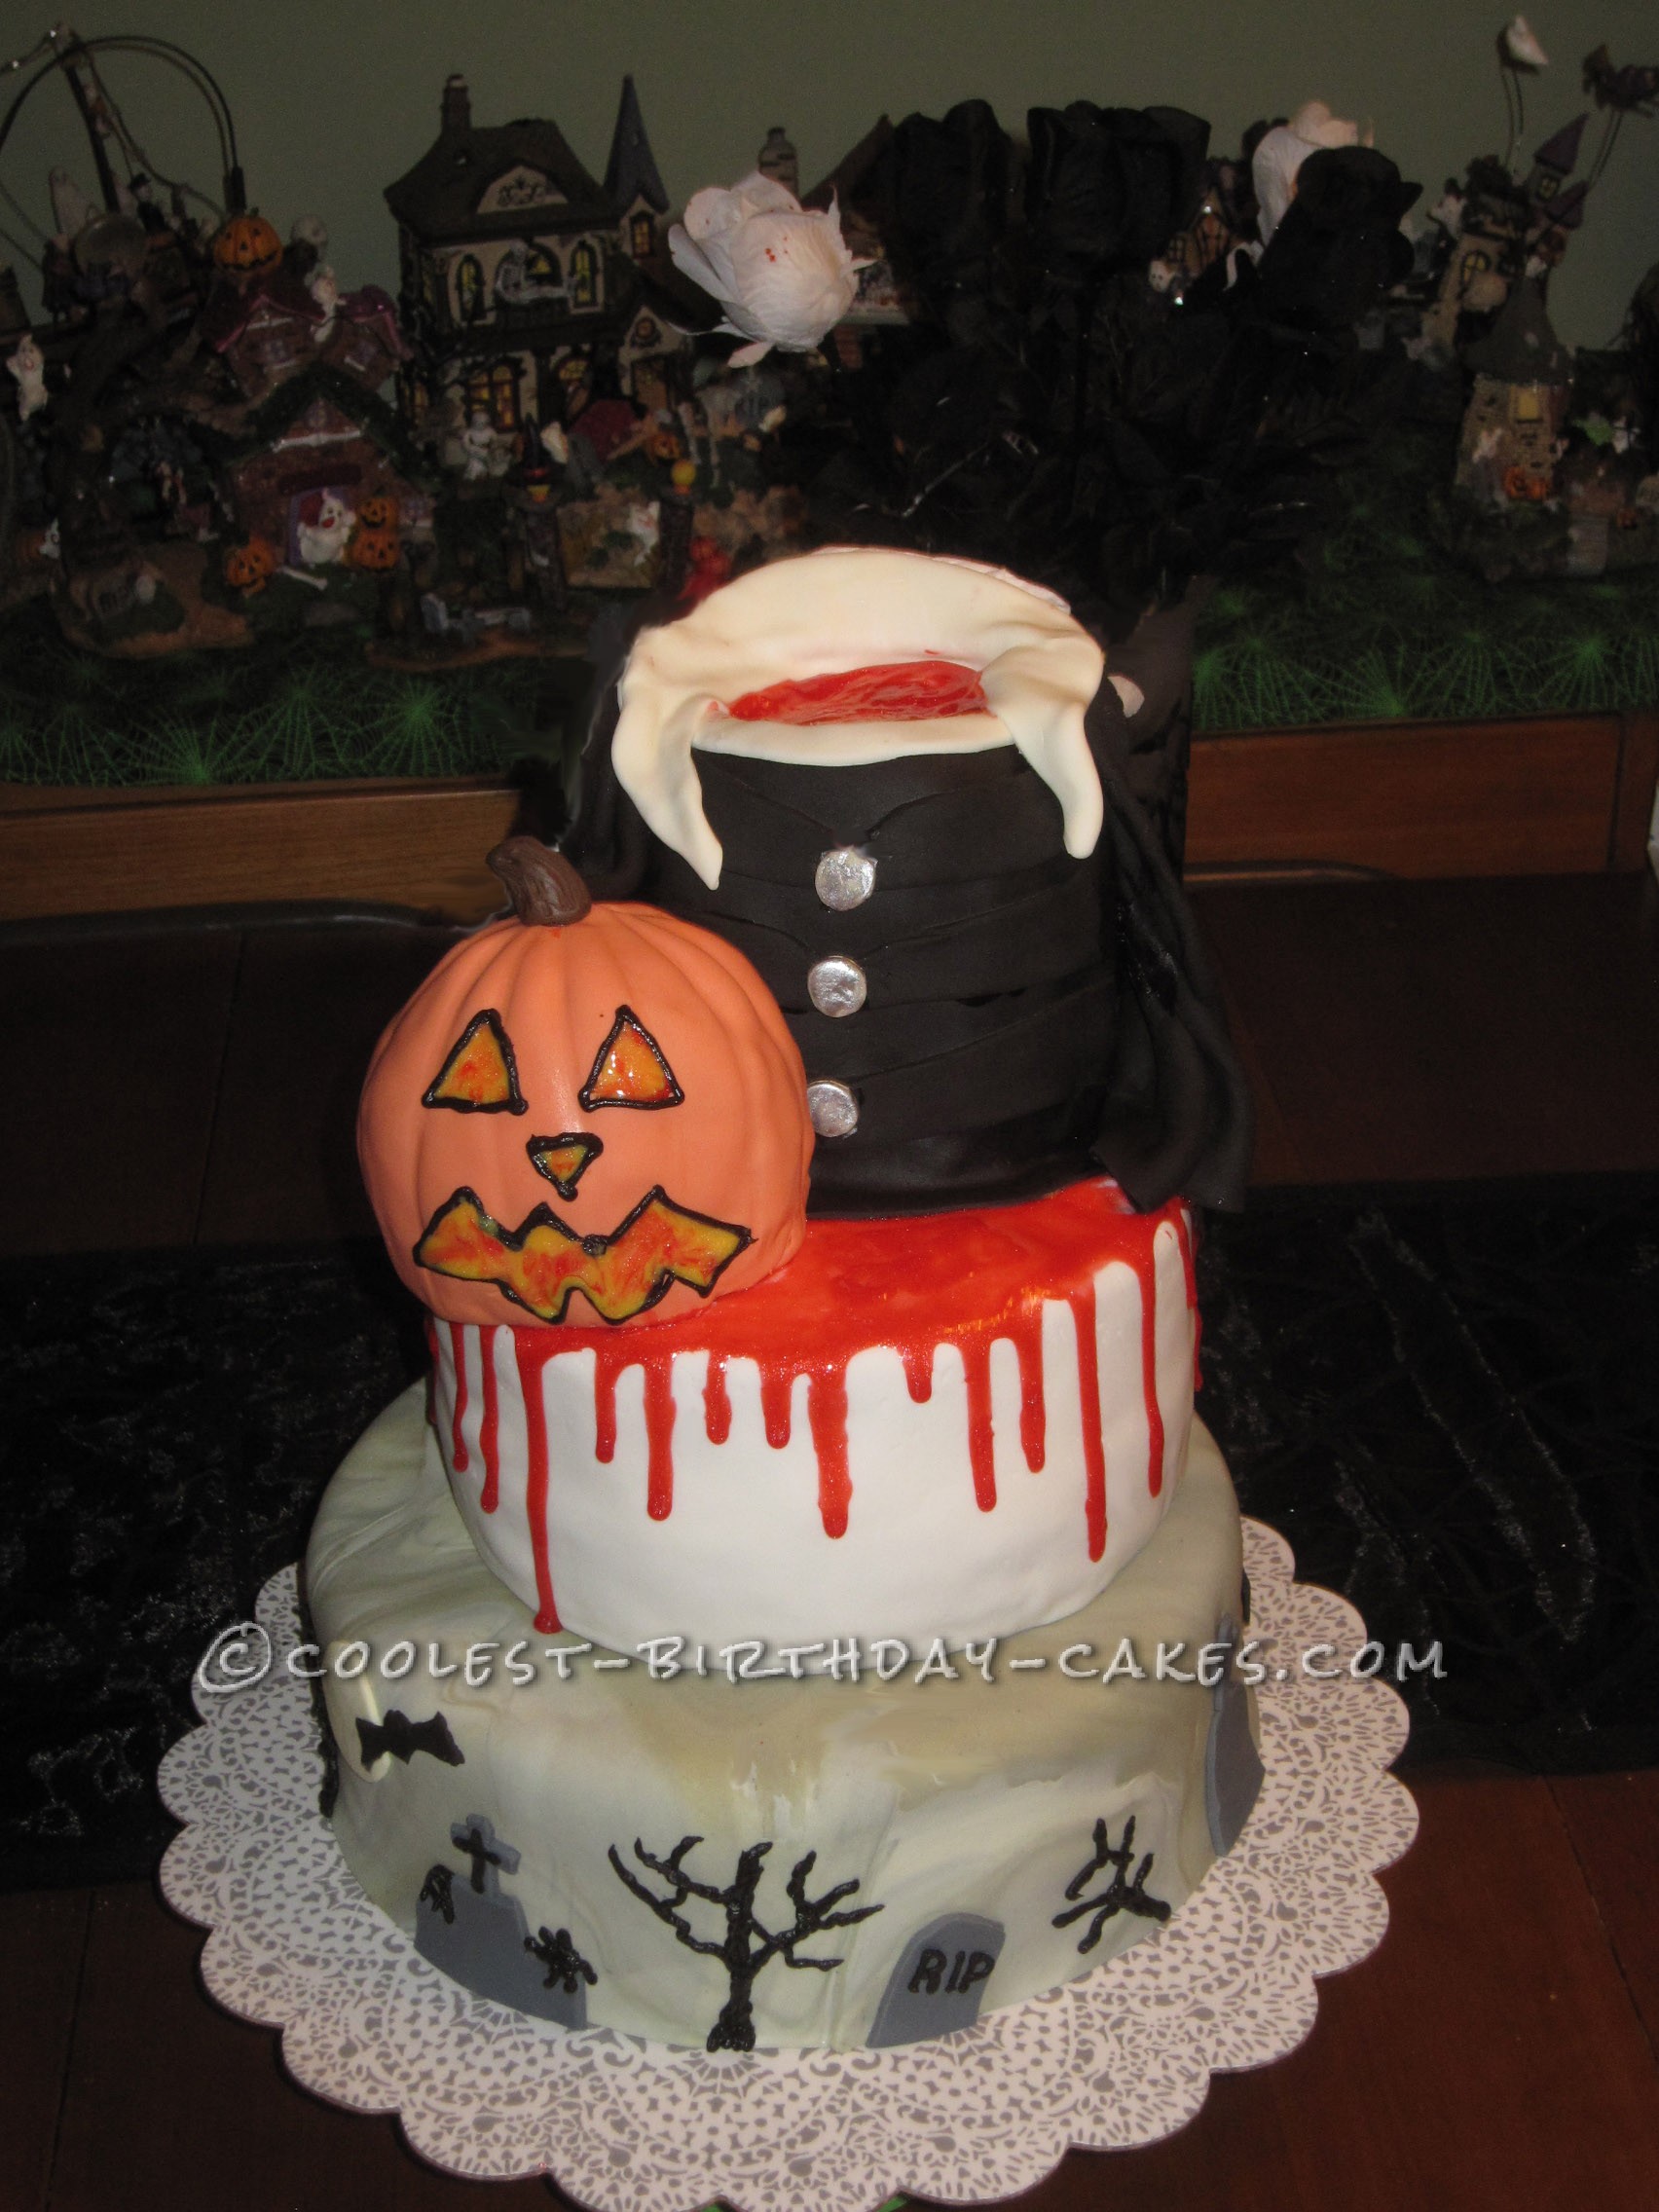 Coolest Headless Halloween Cake